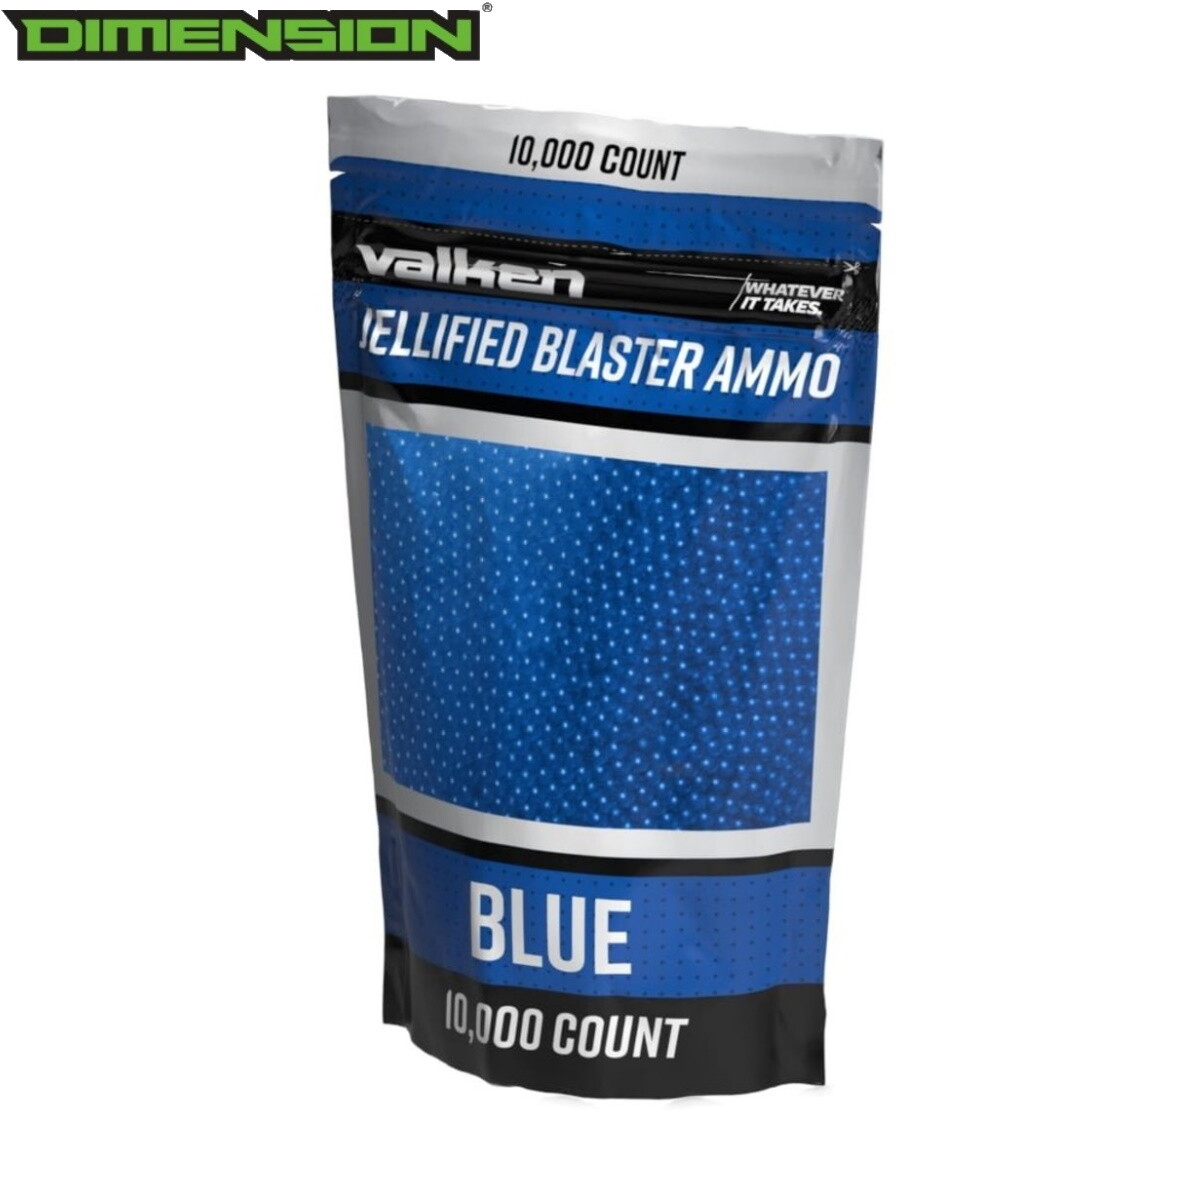 Valken Jellified Blaster Ammo -10,000rds - Blue